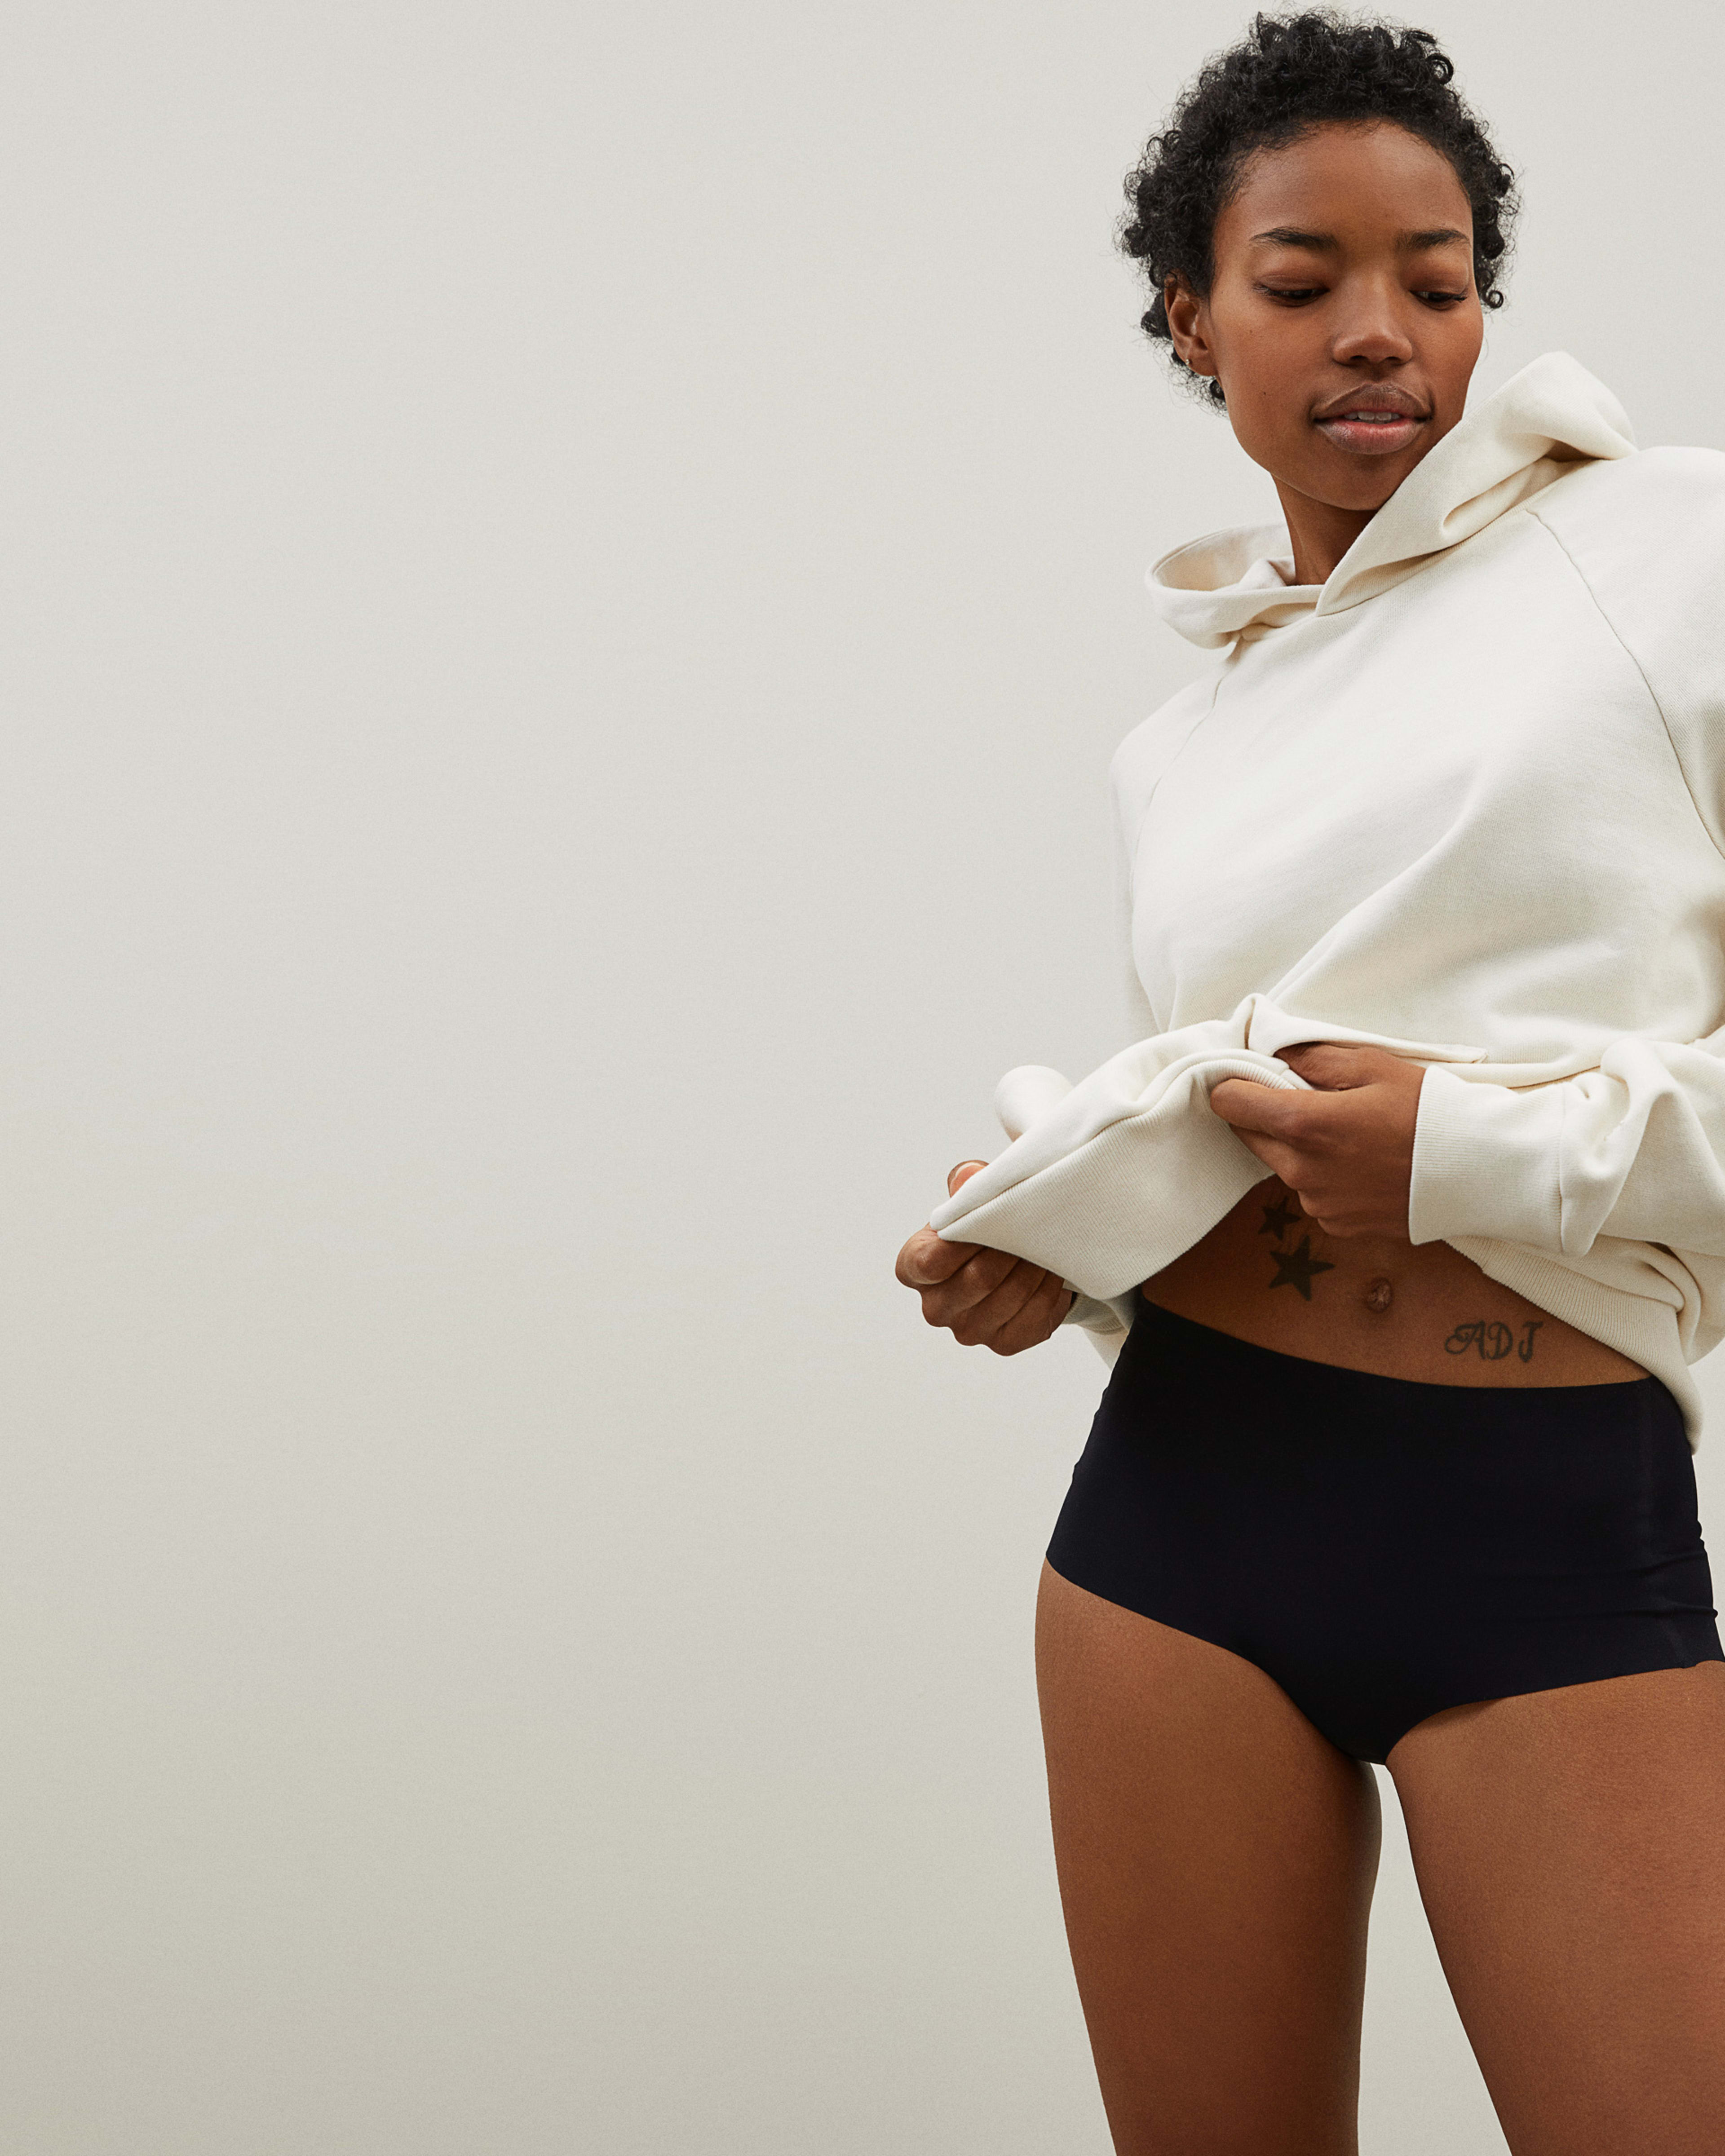 Shorts Underwear Invisível – Just for Her